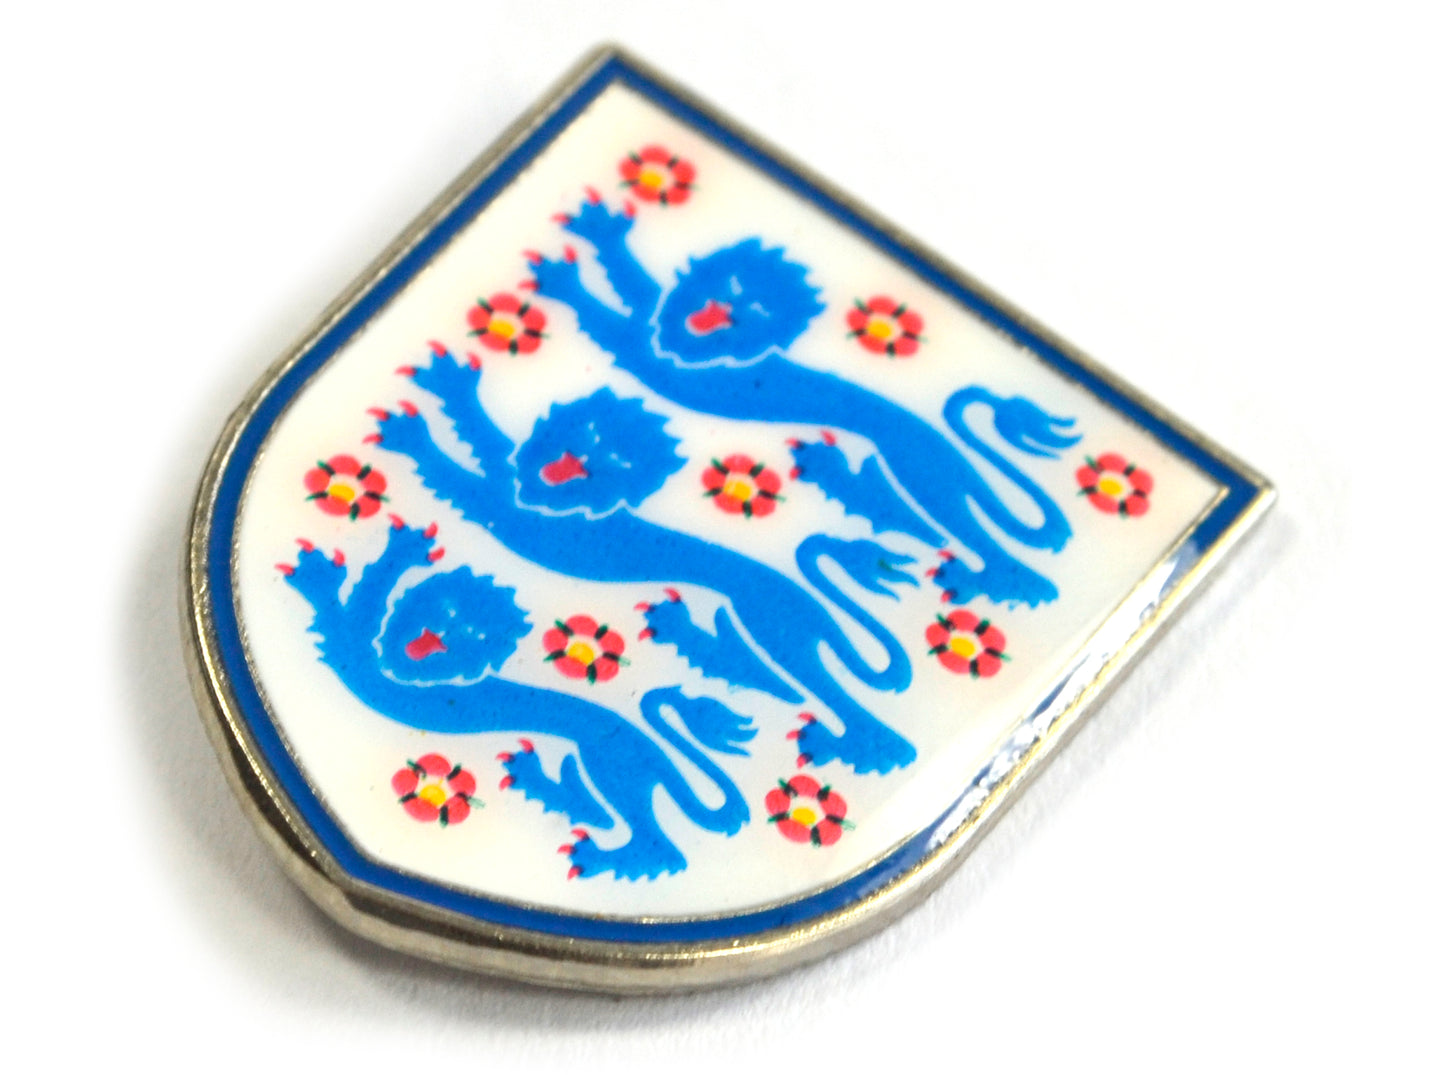 England Three Lions Crest Pin Badge